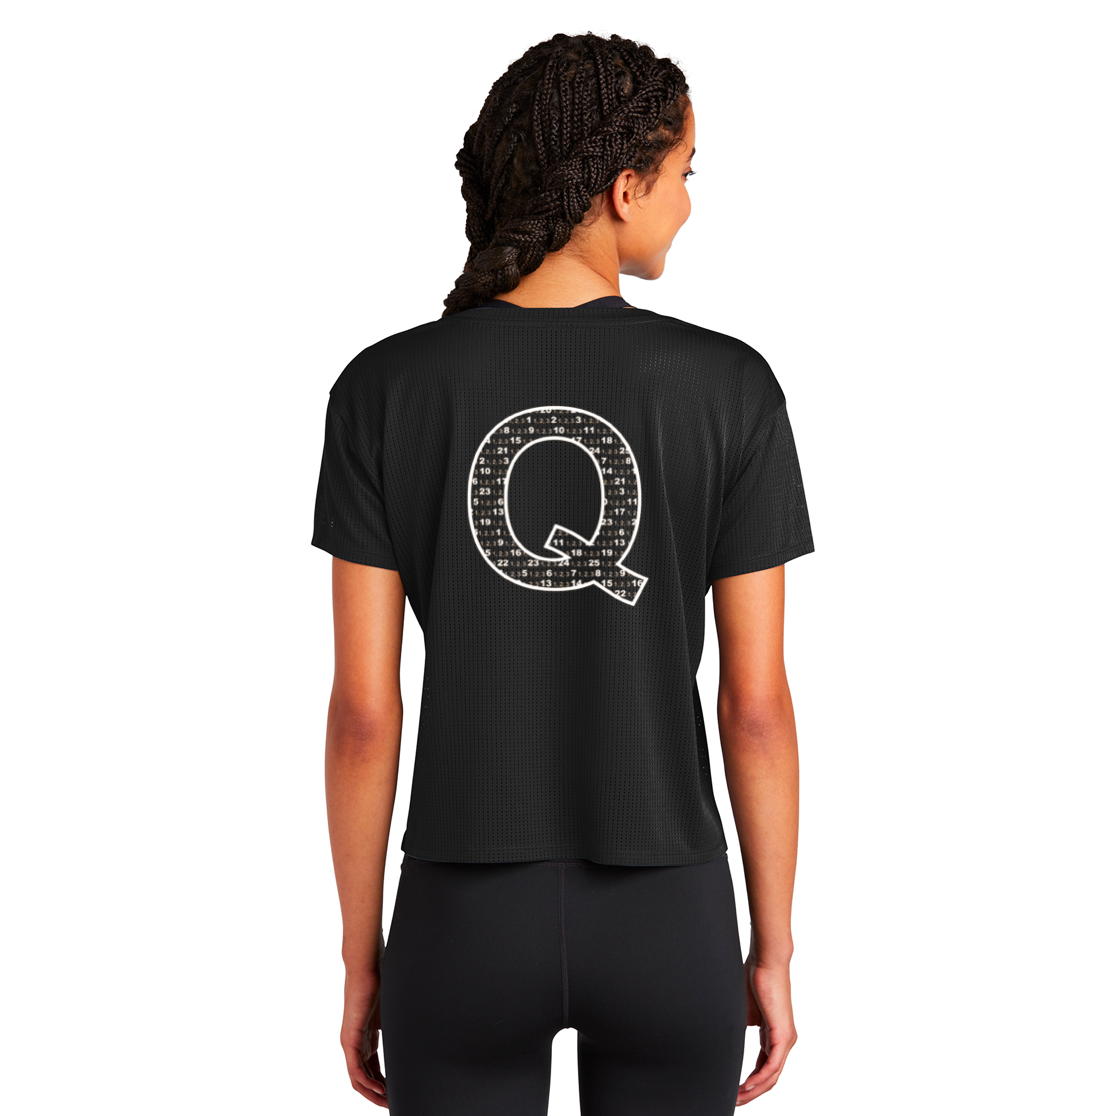 FiA Q Shirts Pre-Order May 2022